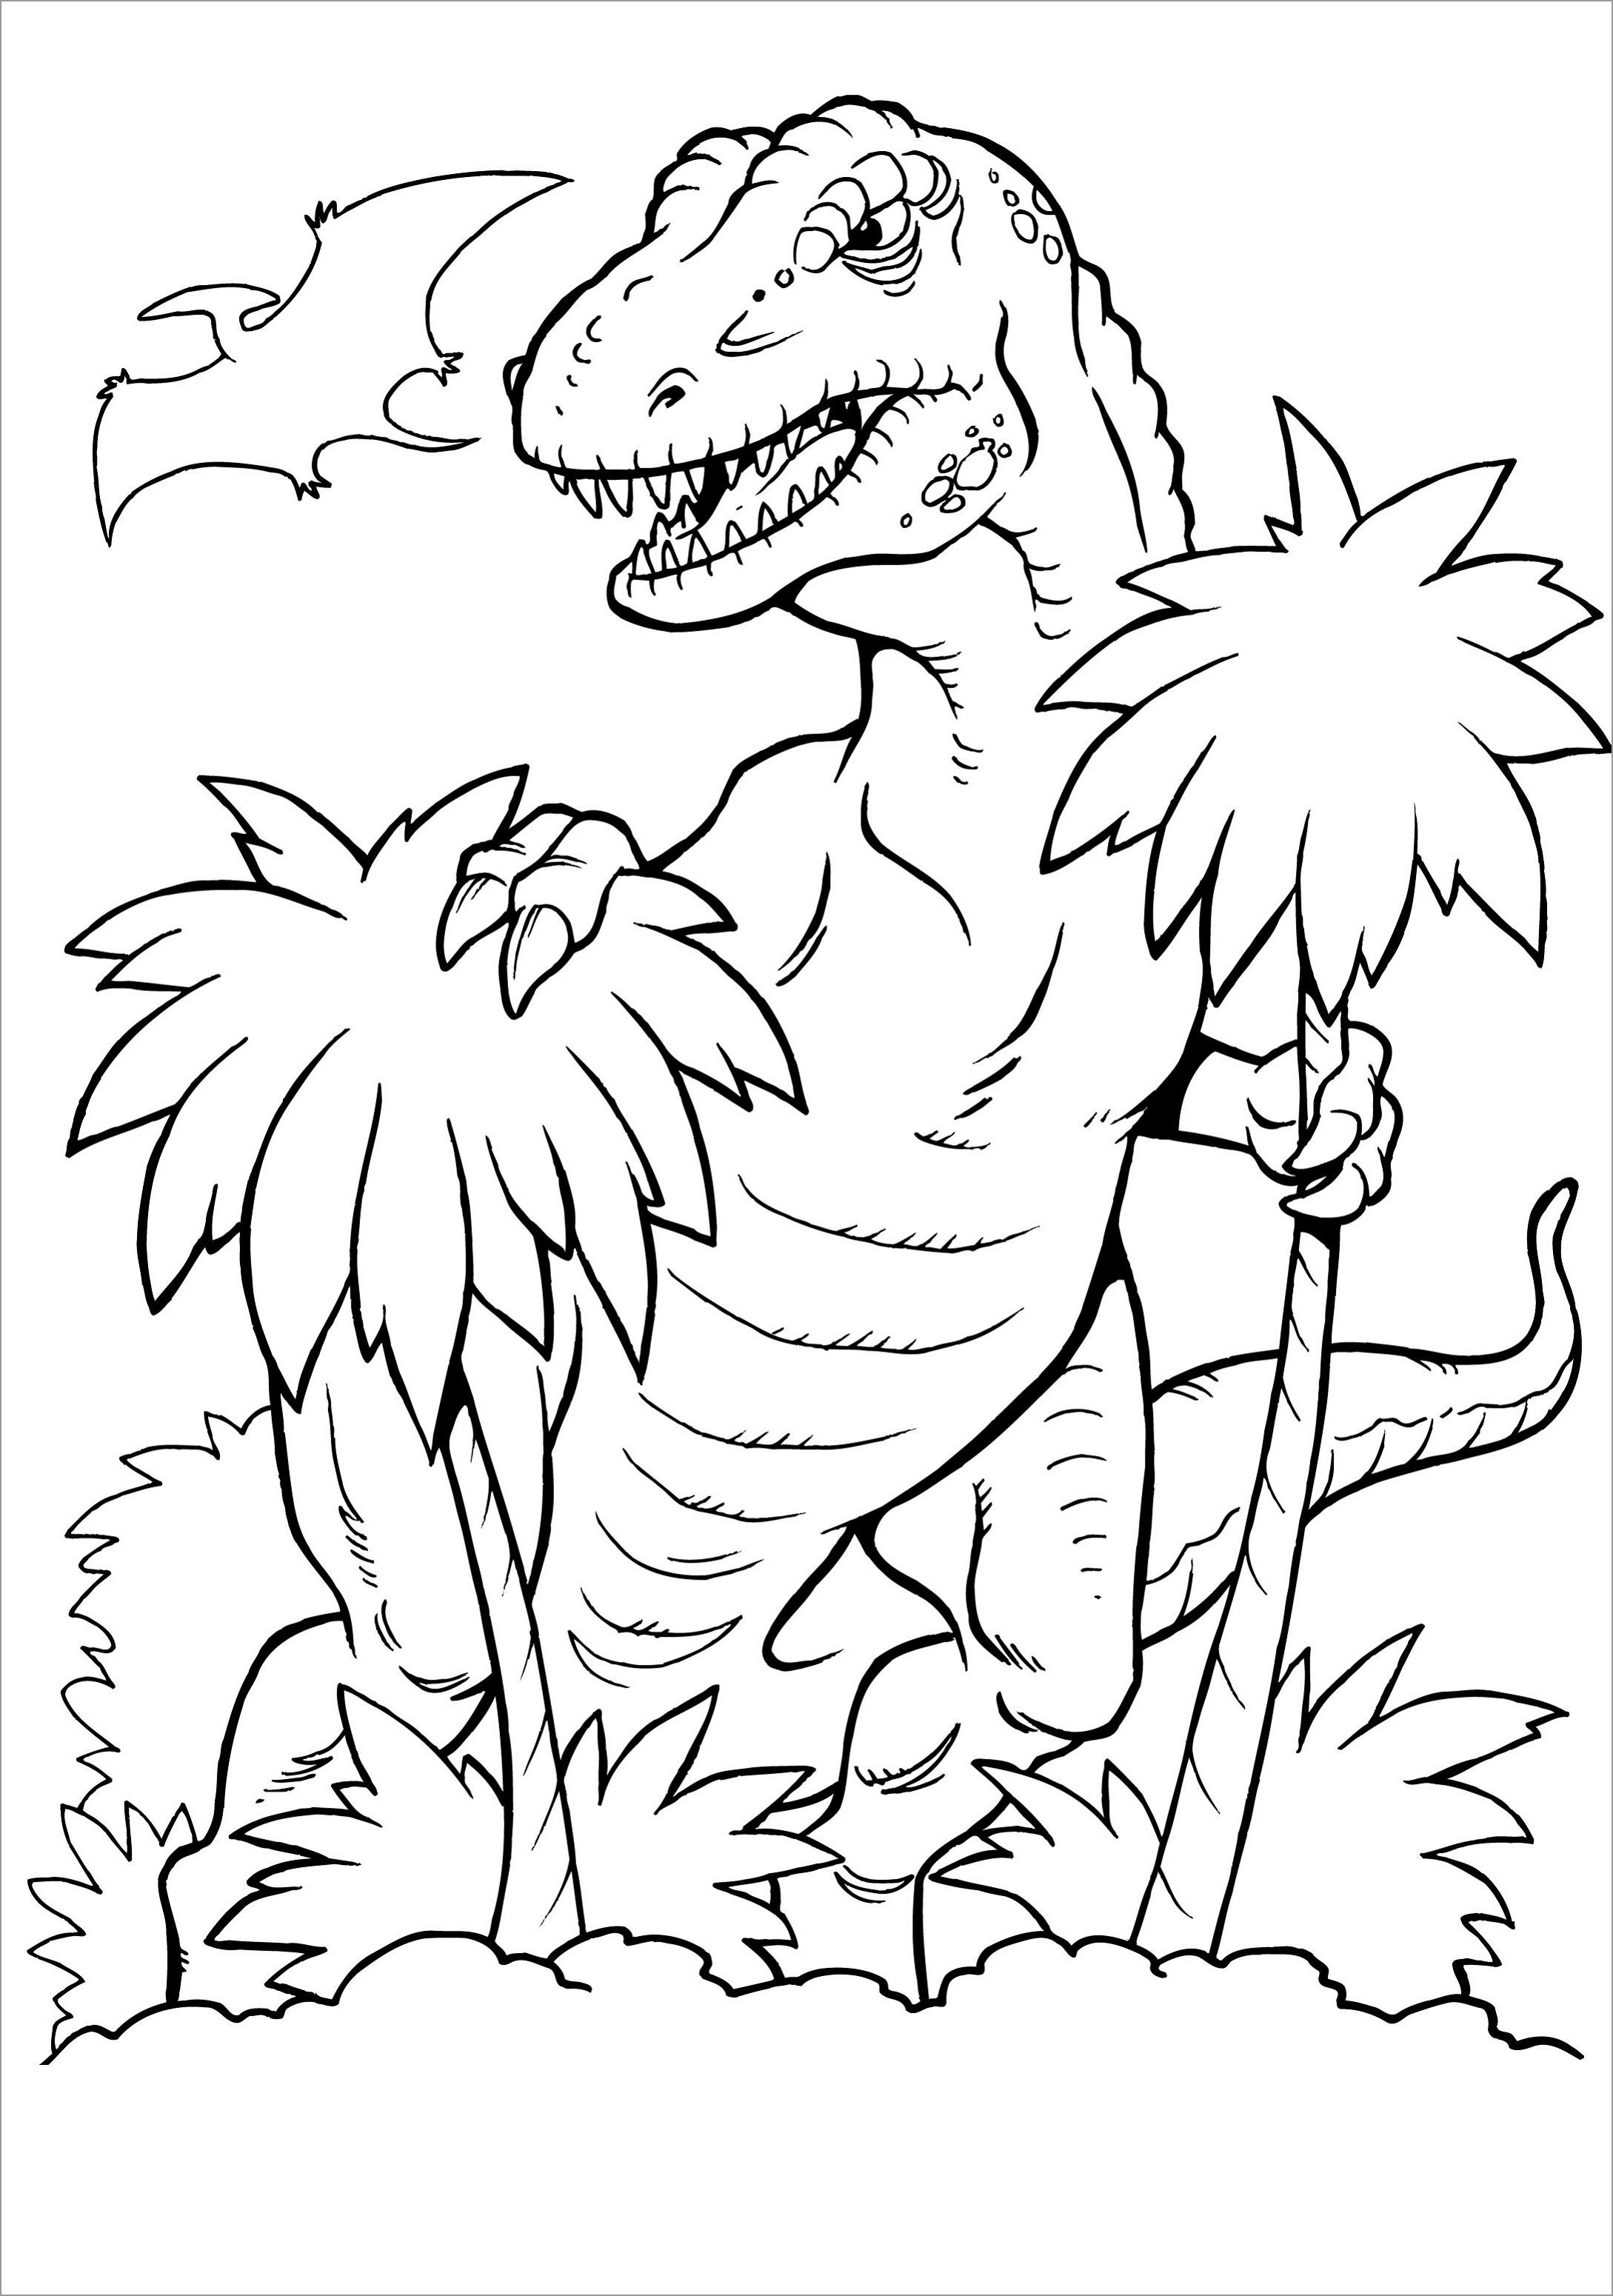 Tyrannosaurus Rex Dinosaurs Coloring Page to Print